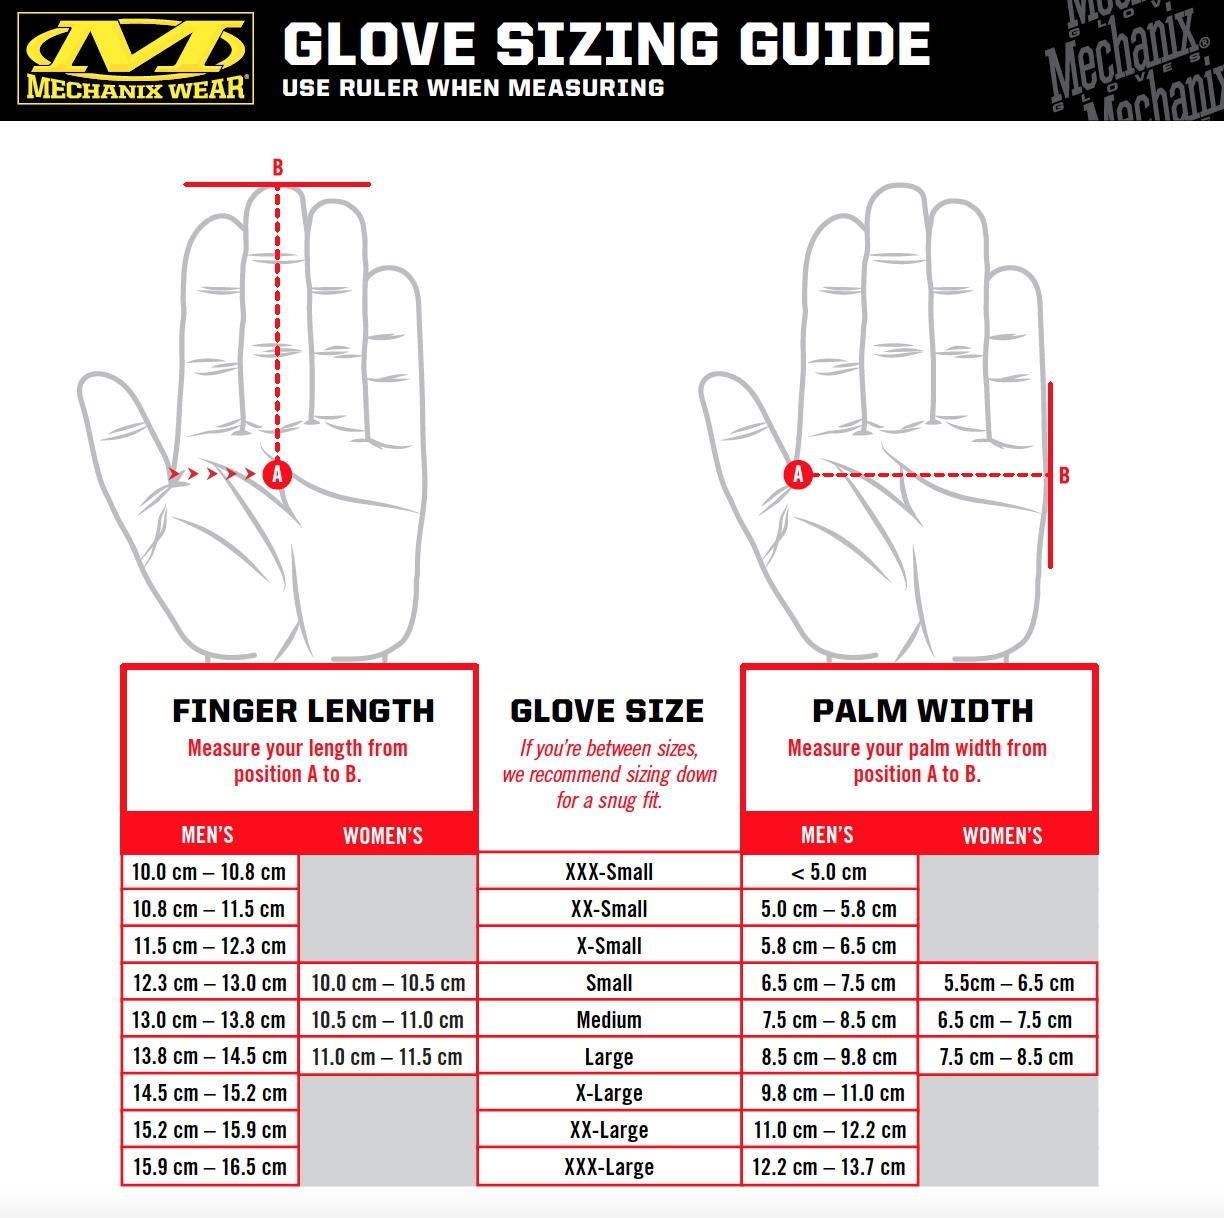 Mechanix Wear Gloves M-Pact® 3